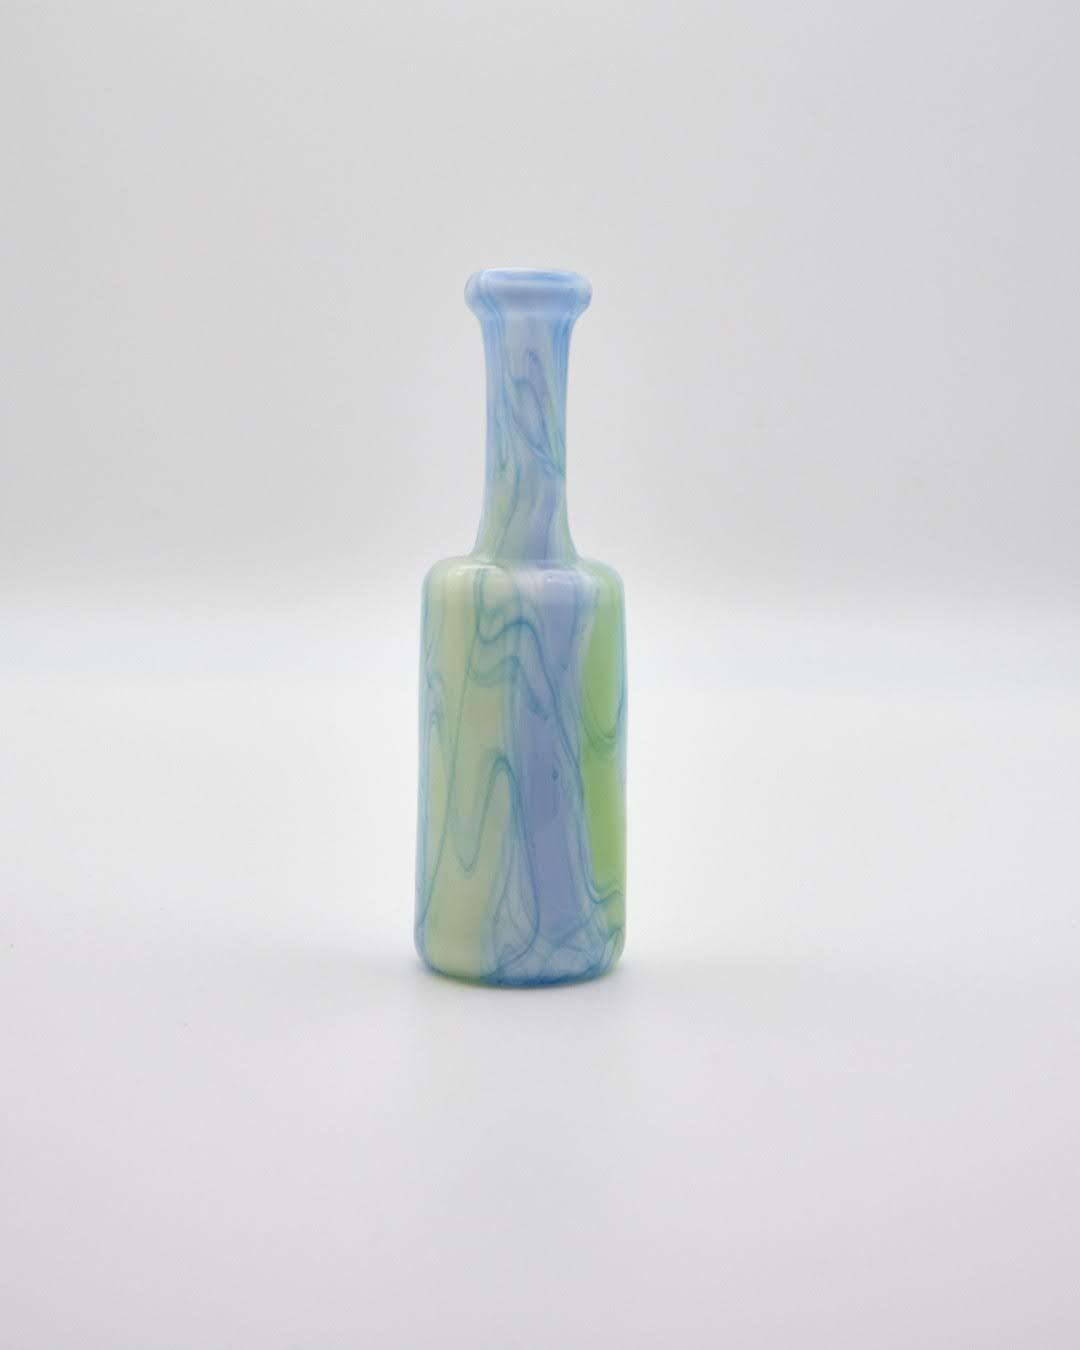 hand-blown art piece - Blue/Green One Hitter Bottle by Scomo